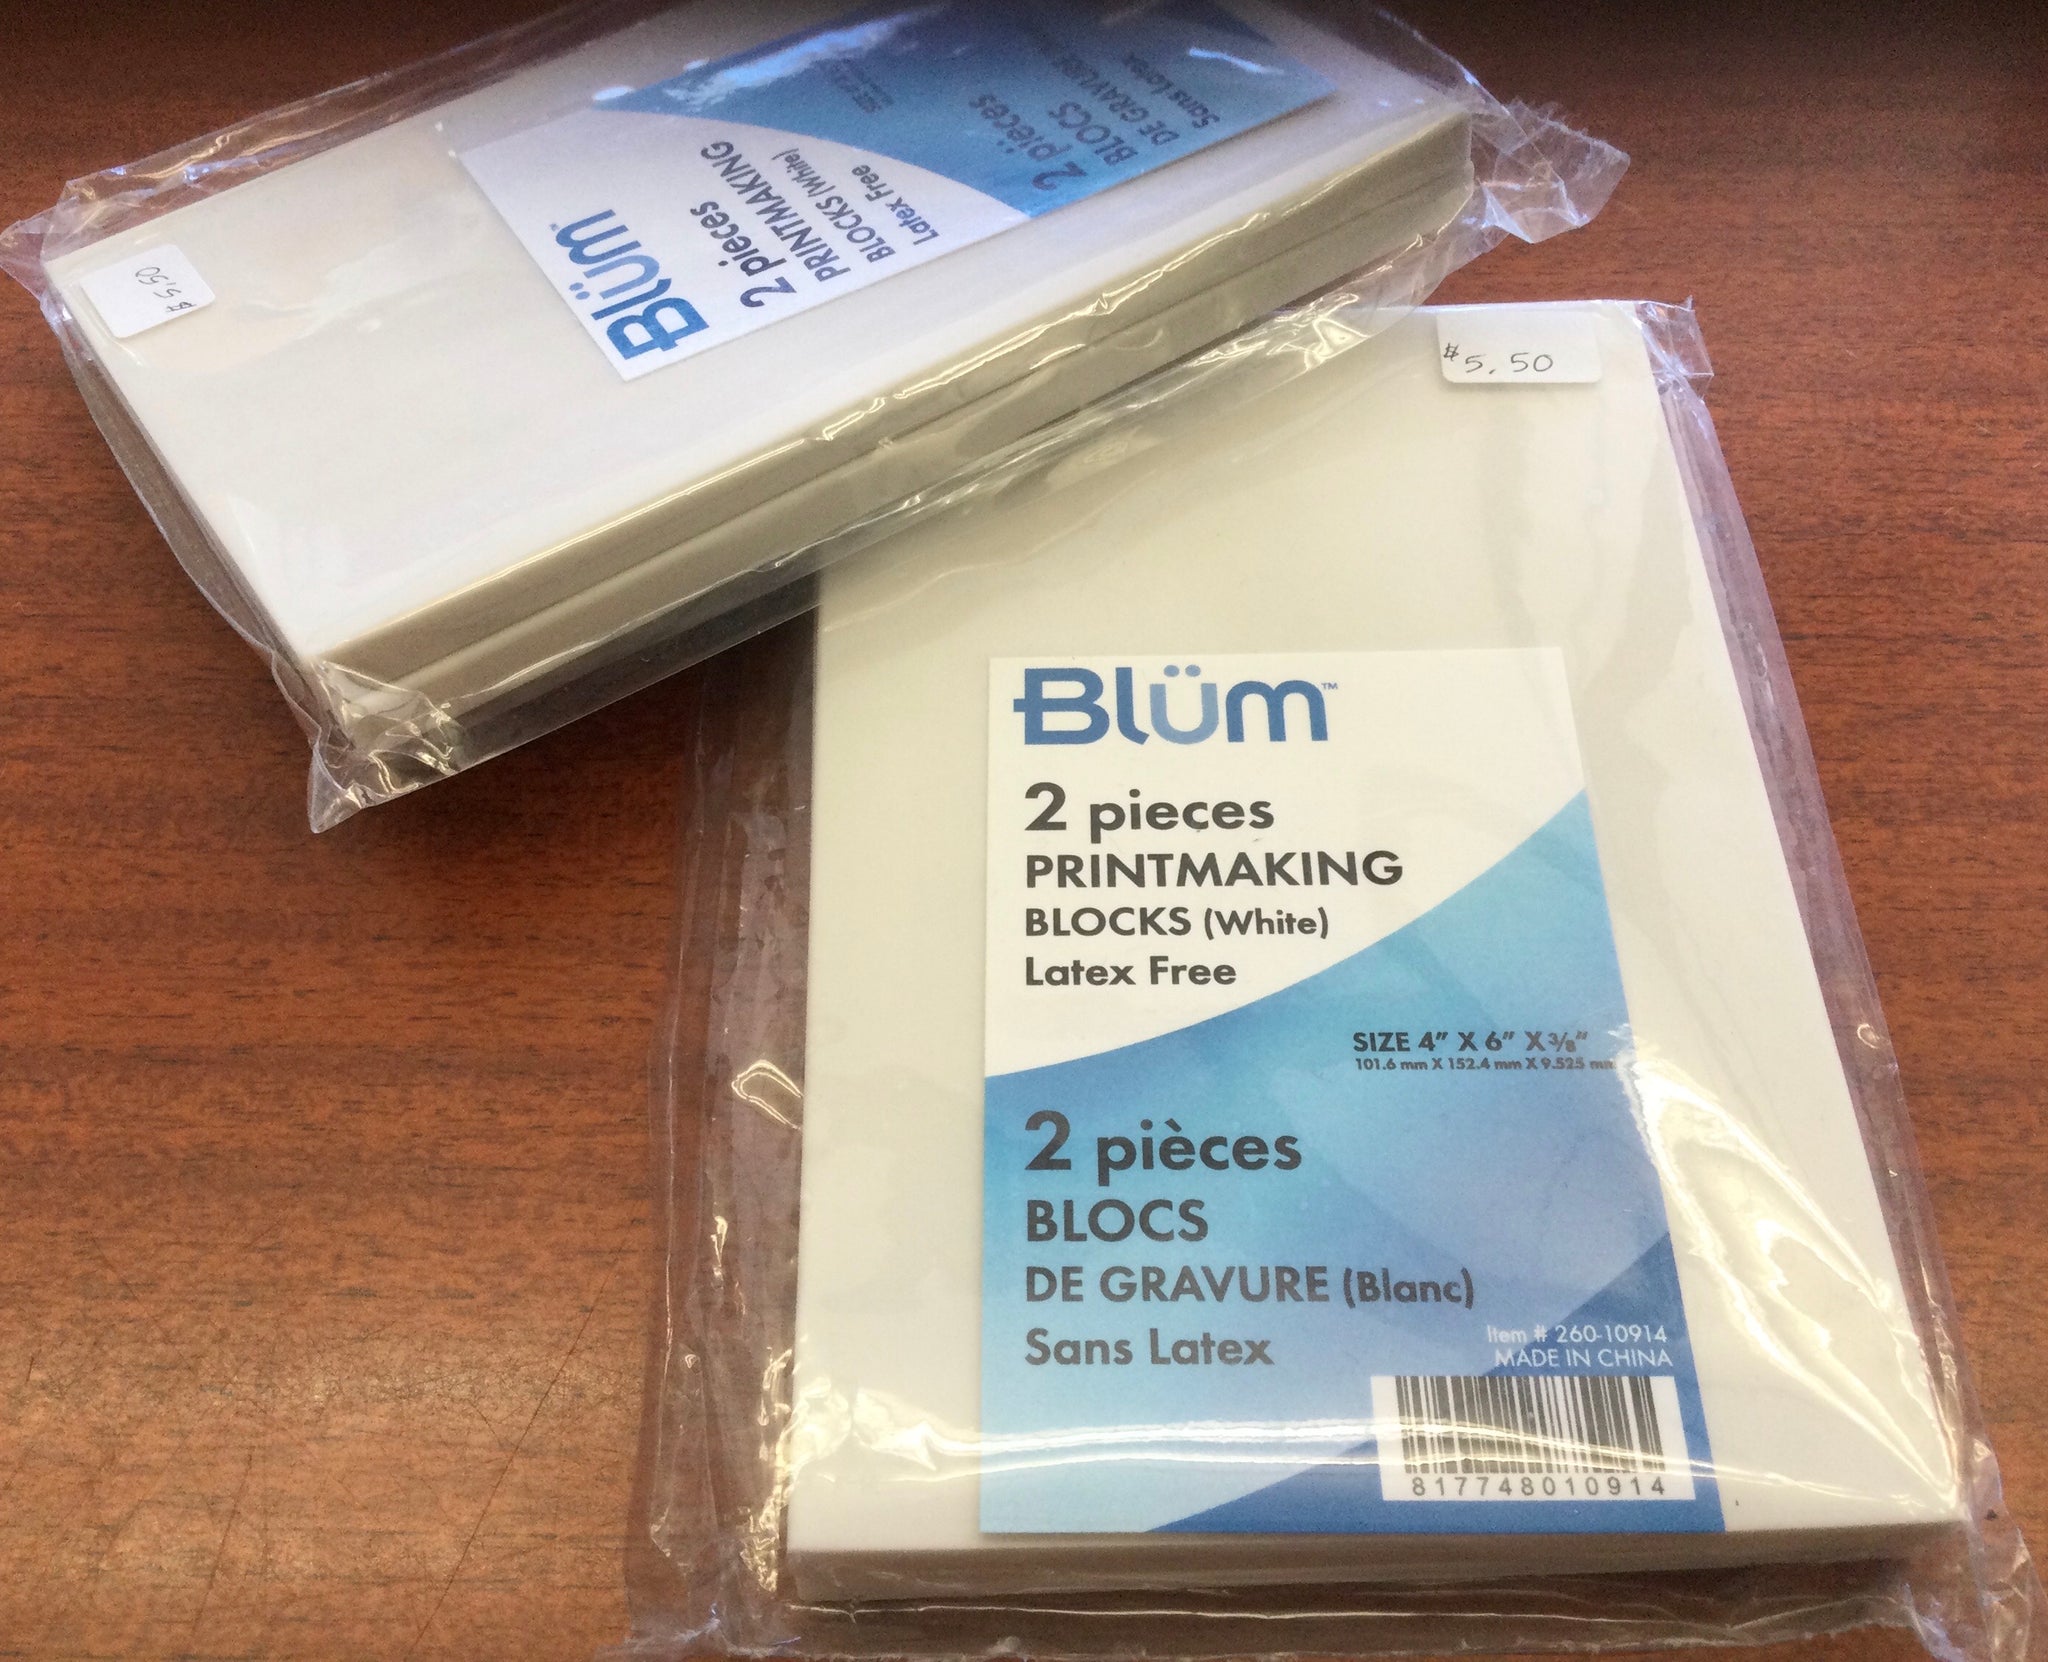 Blum 2 pieces printmaking Blocks white 4x6x3/8 inches